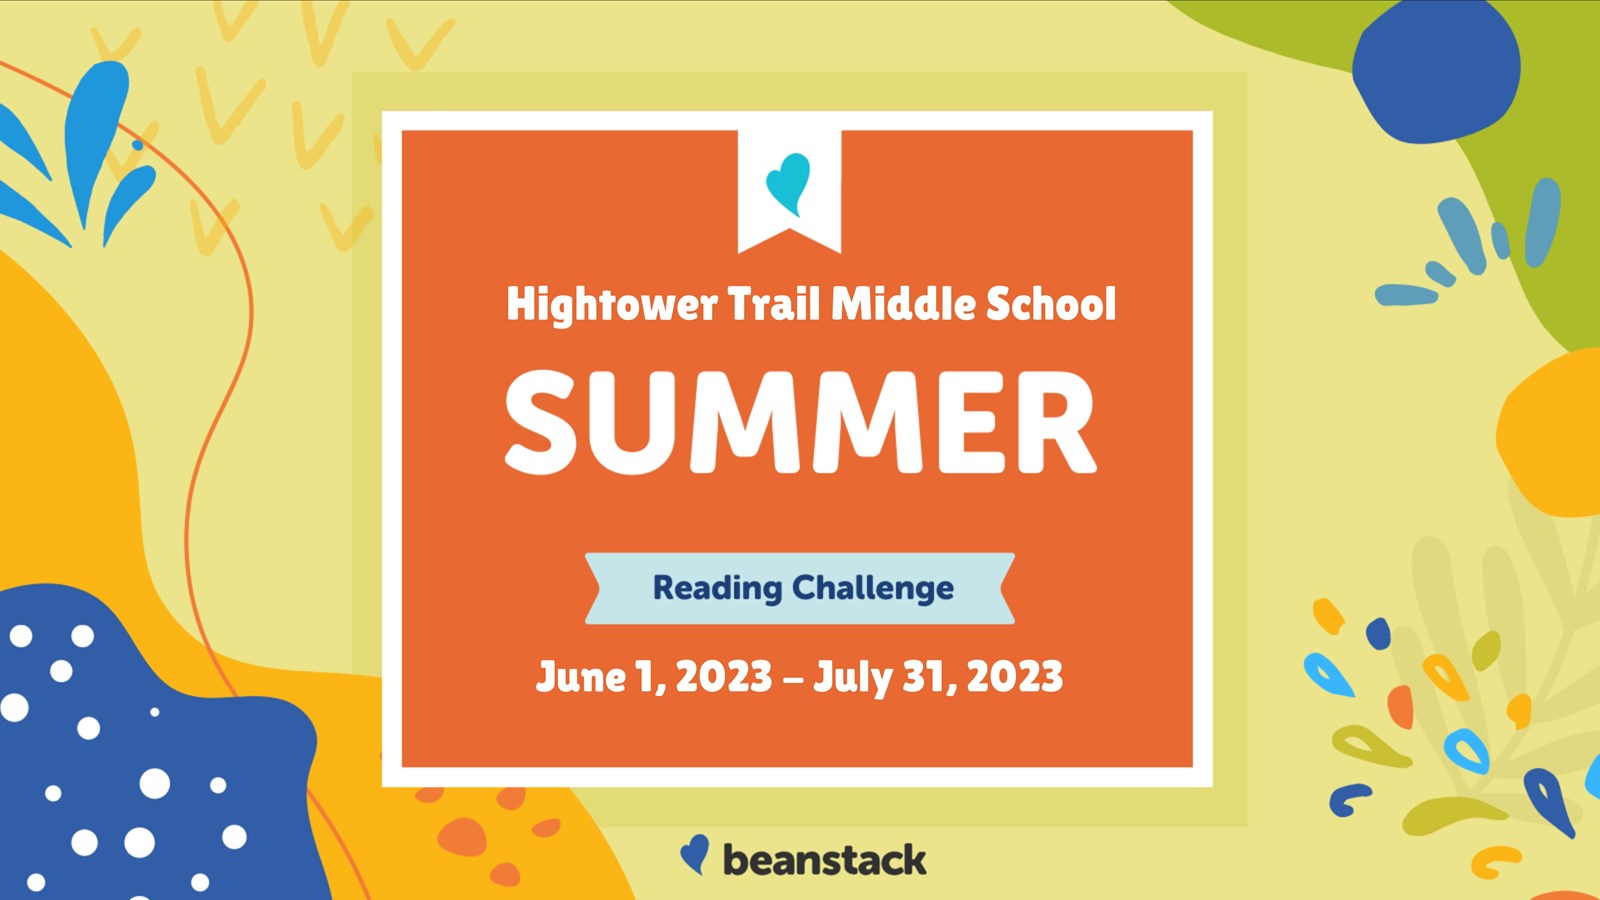 summer reading challenge